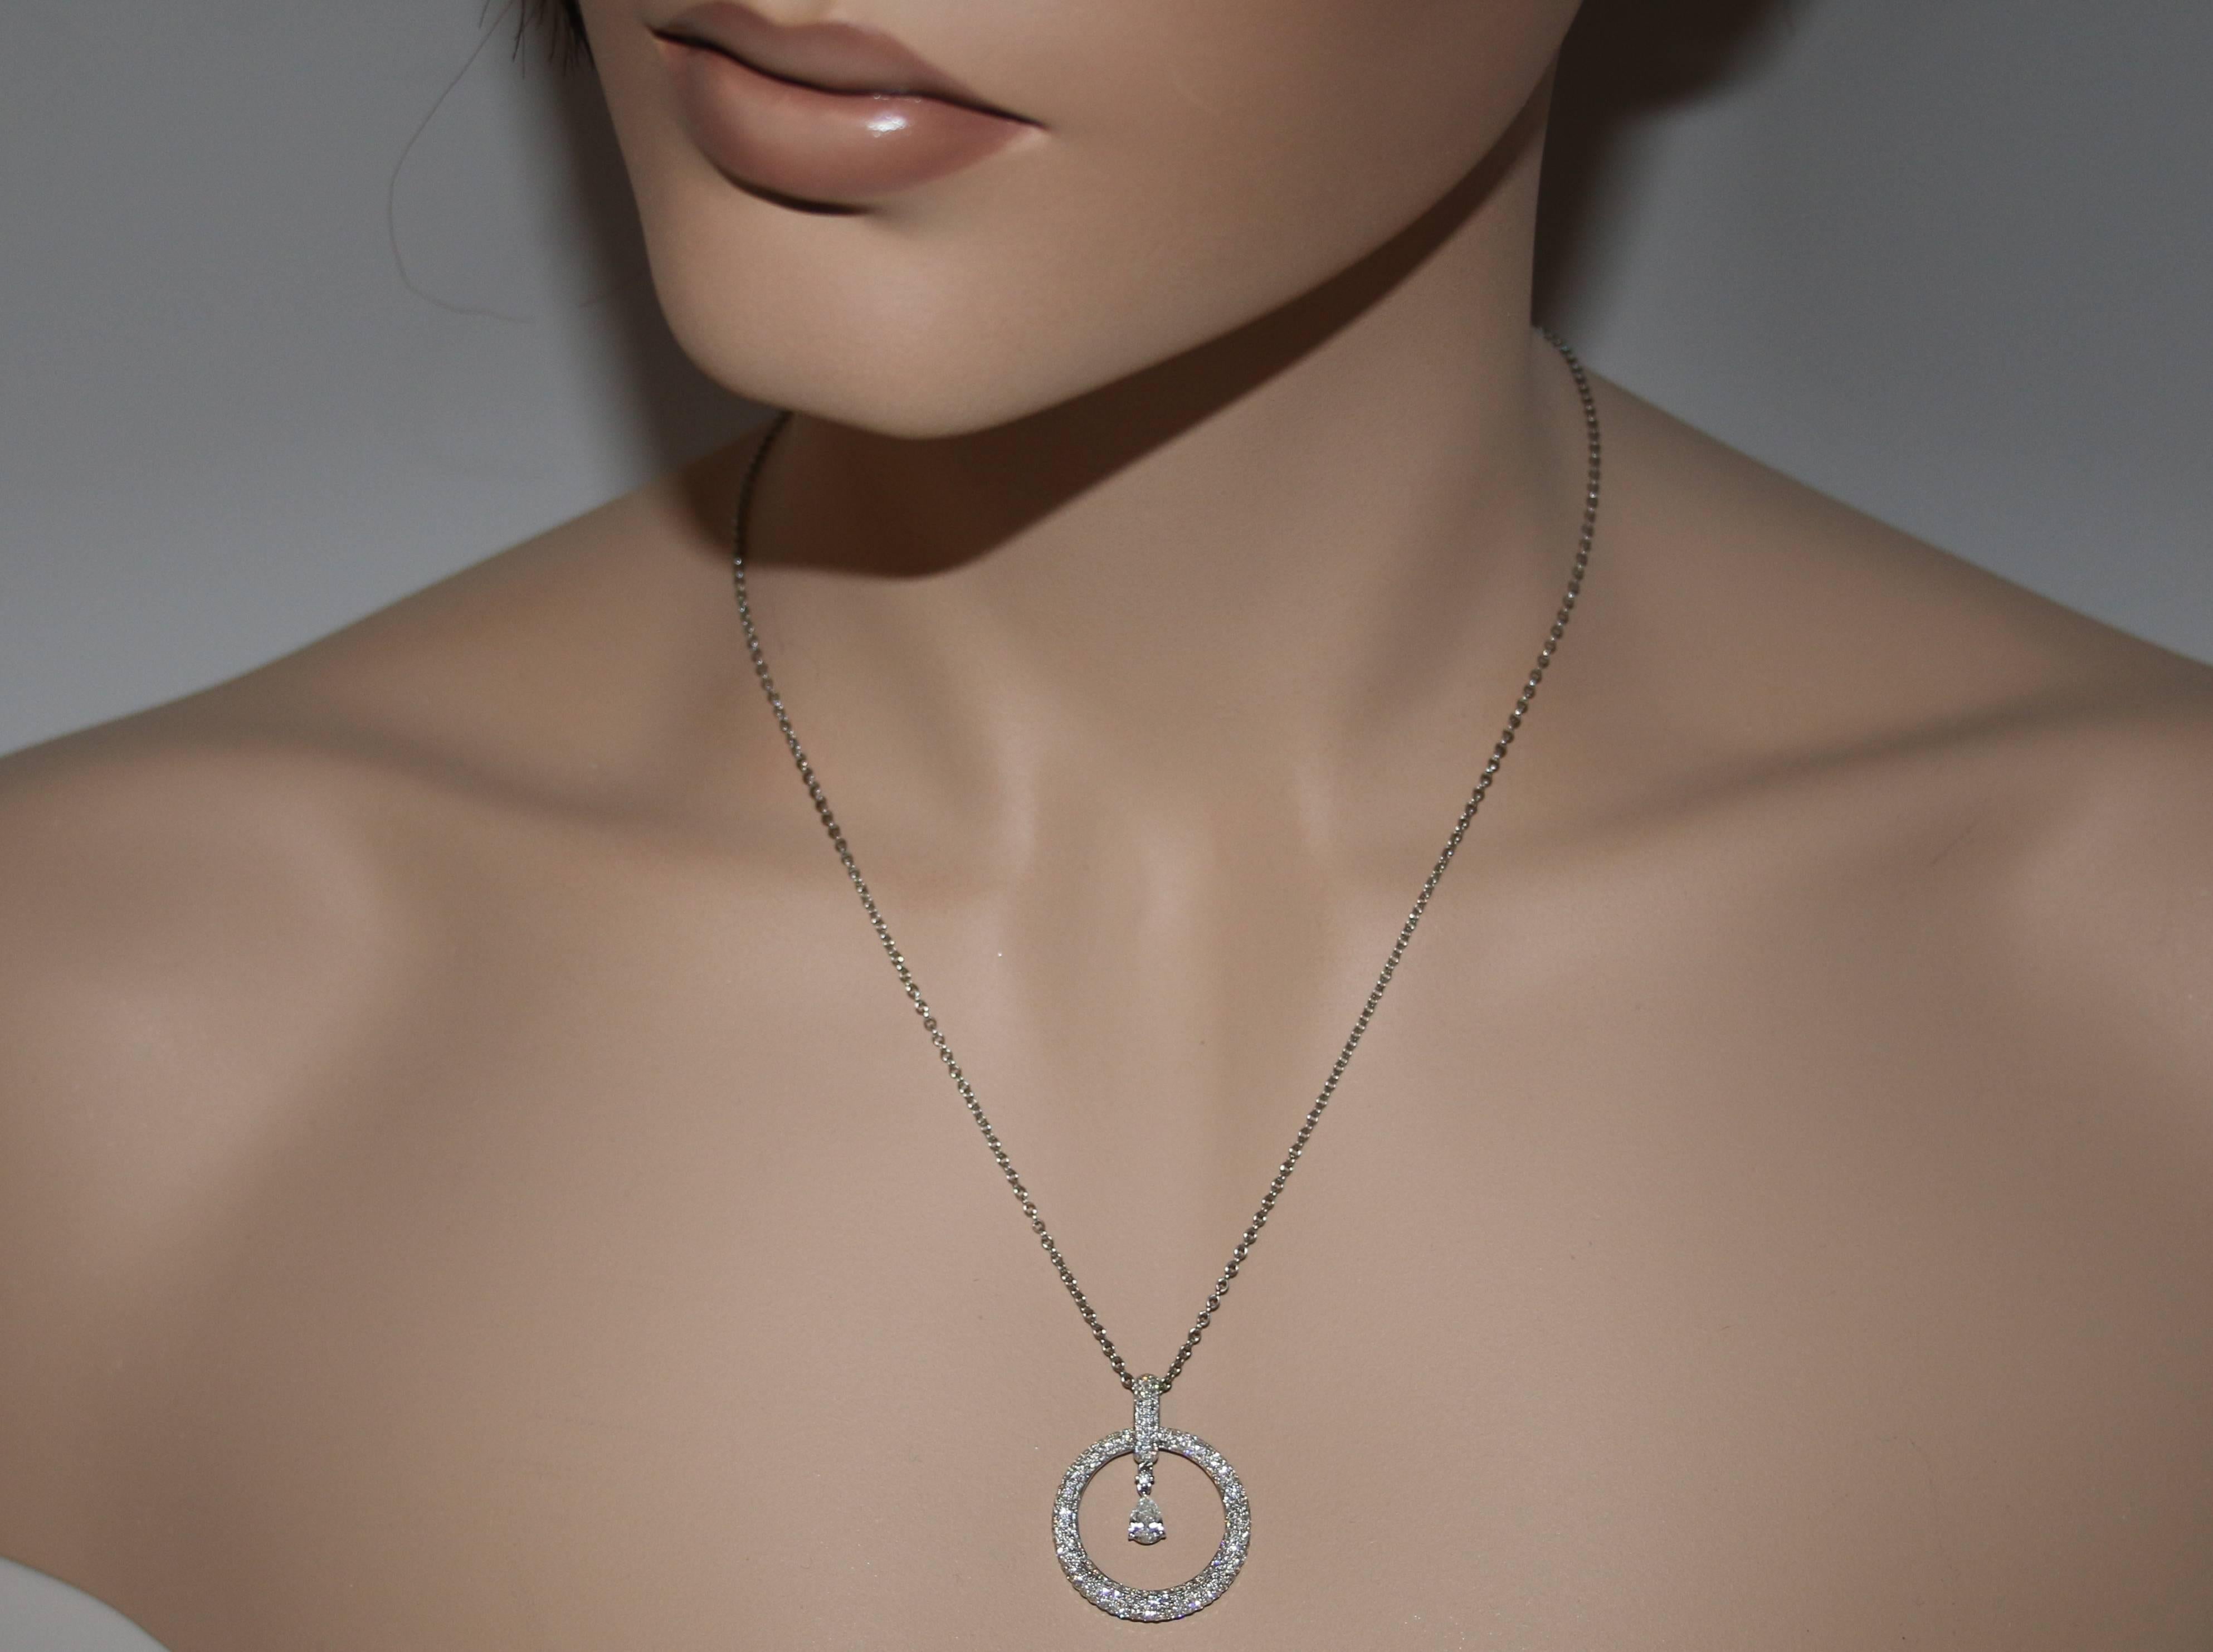 Circle Pave Diamond Necklace
The pendant is 18K White Gold
1.56Ct Diamonds F VS
0.32Ct Pear Shape Dangle Diamond F VS
The pendant is 1 1/8